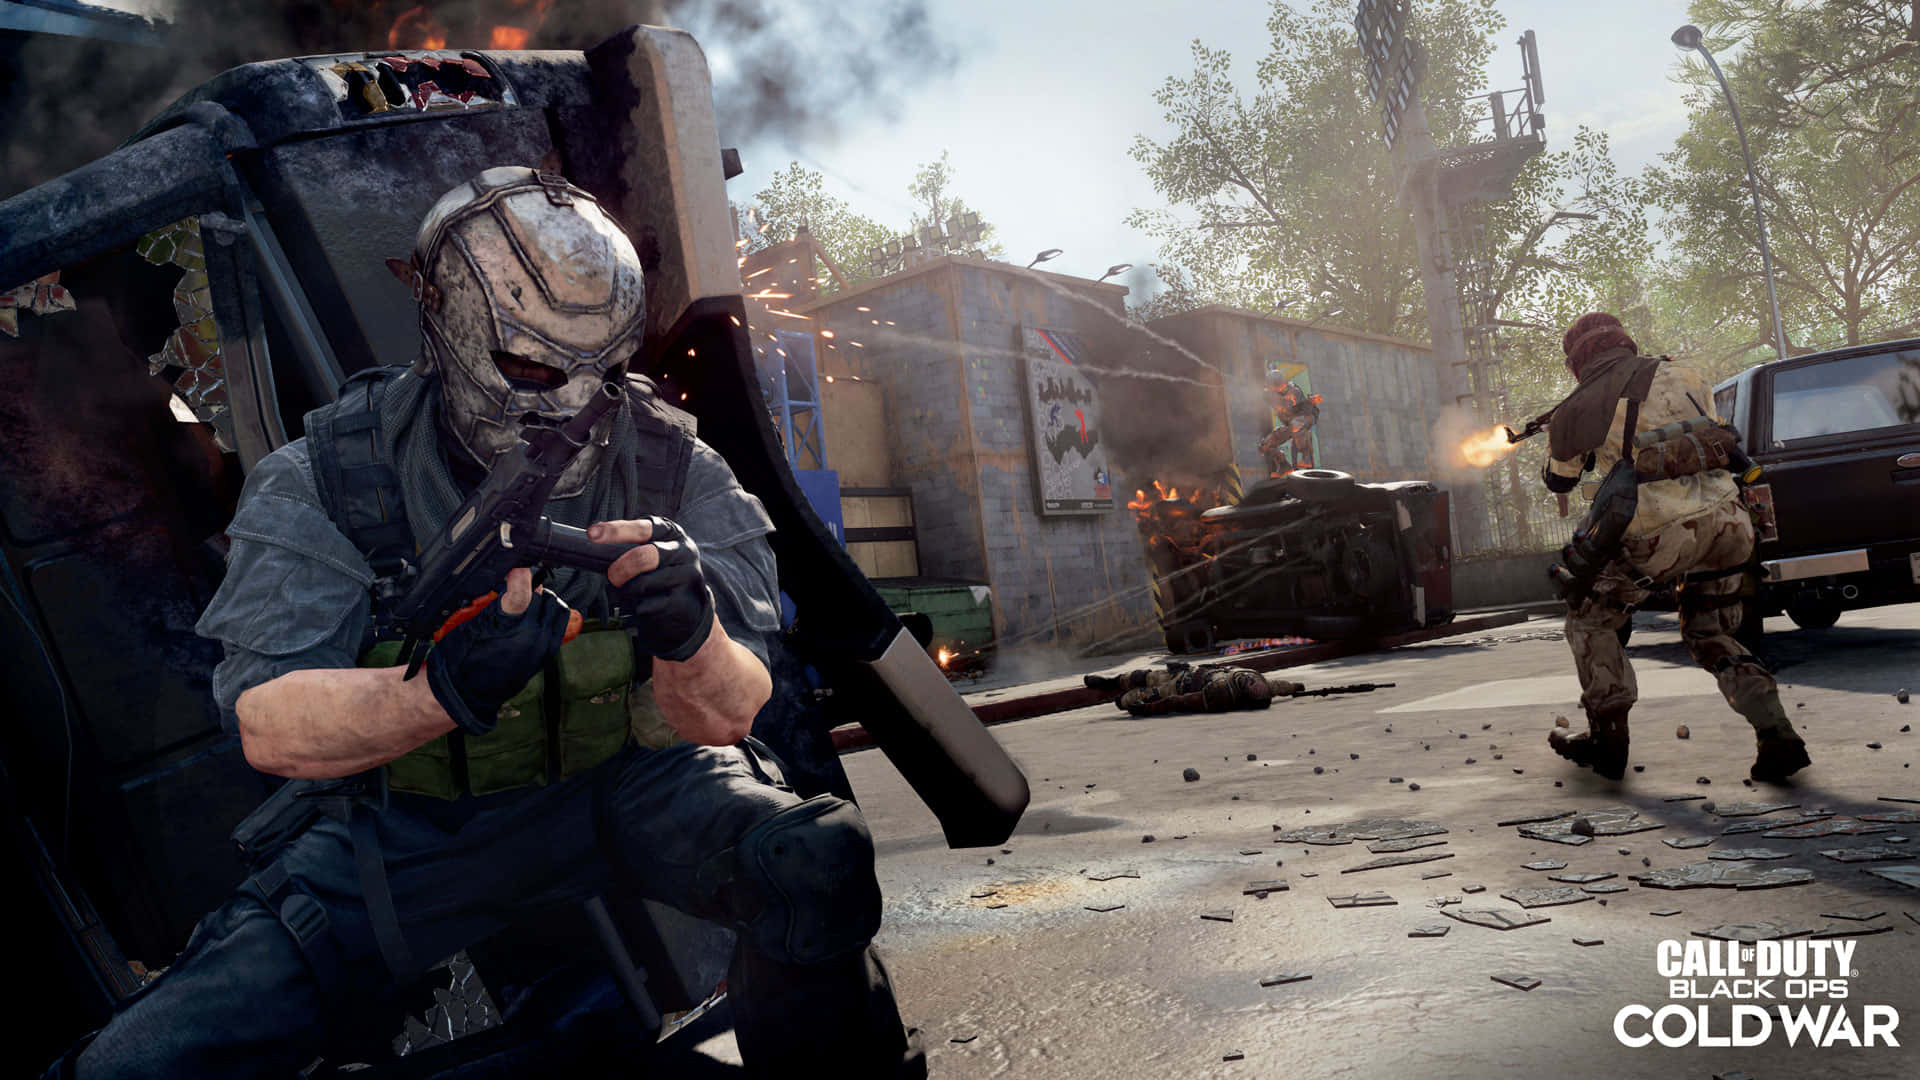 Uppleven Kall Krigsstrid Med Call Of Duty Black Ops Cold War